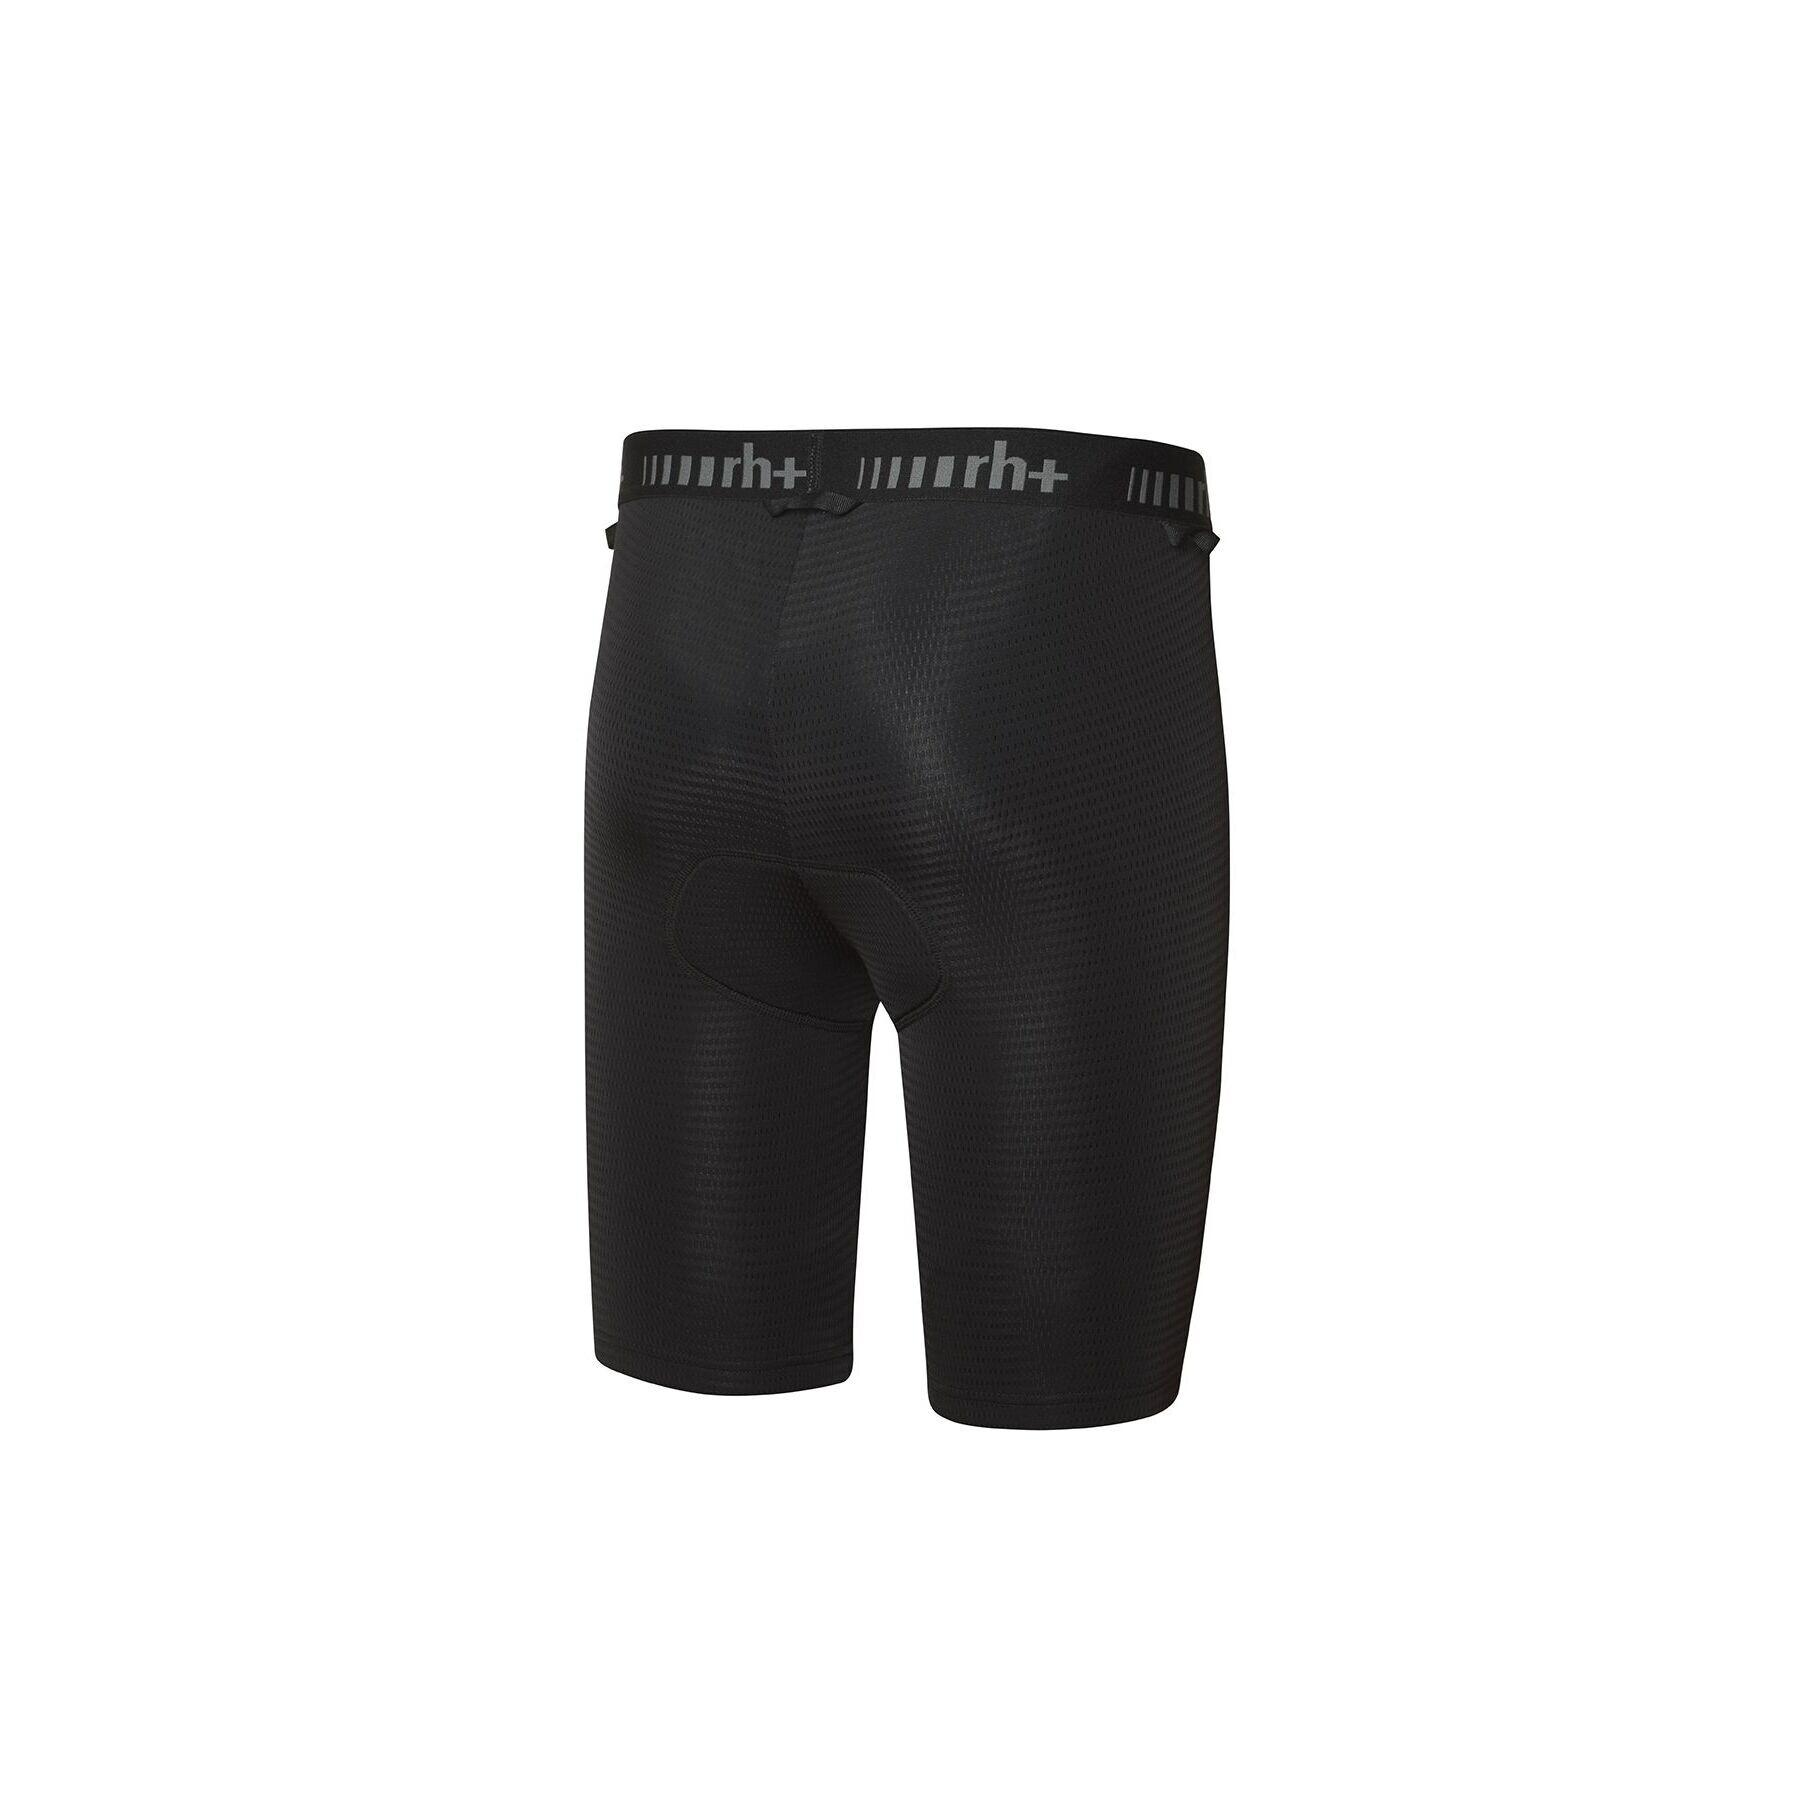 Pantalones cortos rh+ Inner